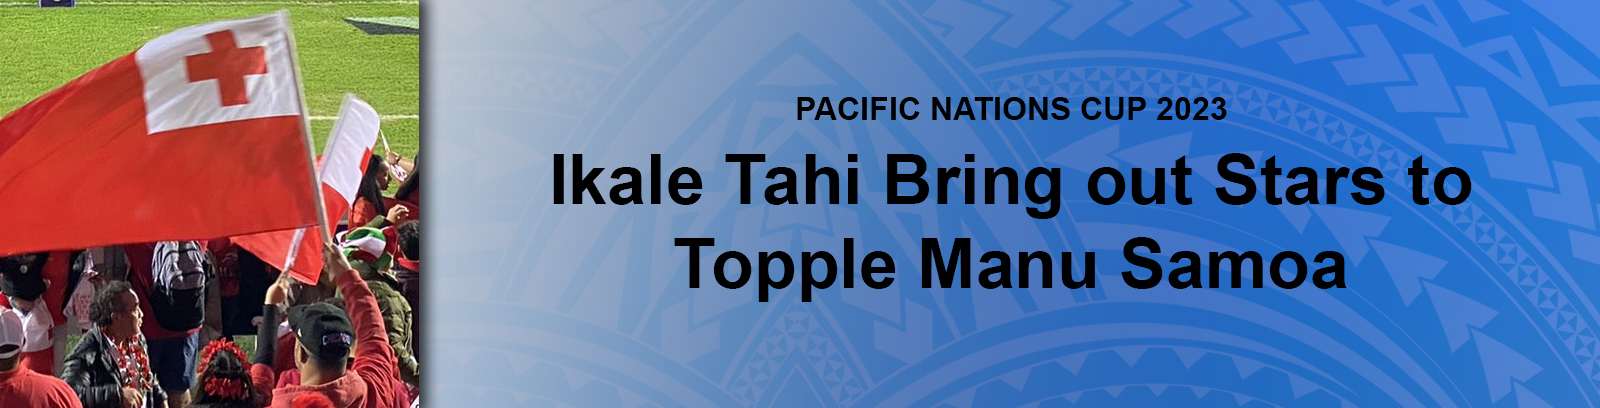 Article - Ikale Tahi Bring out Stars to Topple Manu Samoa